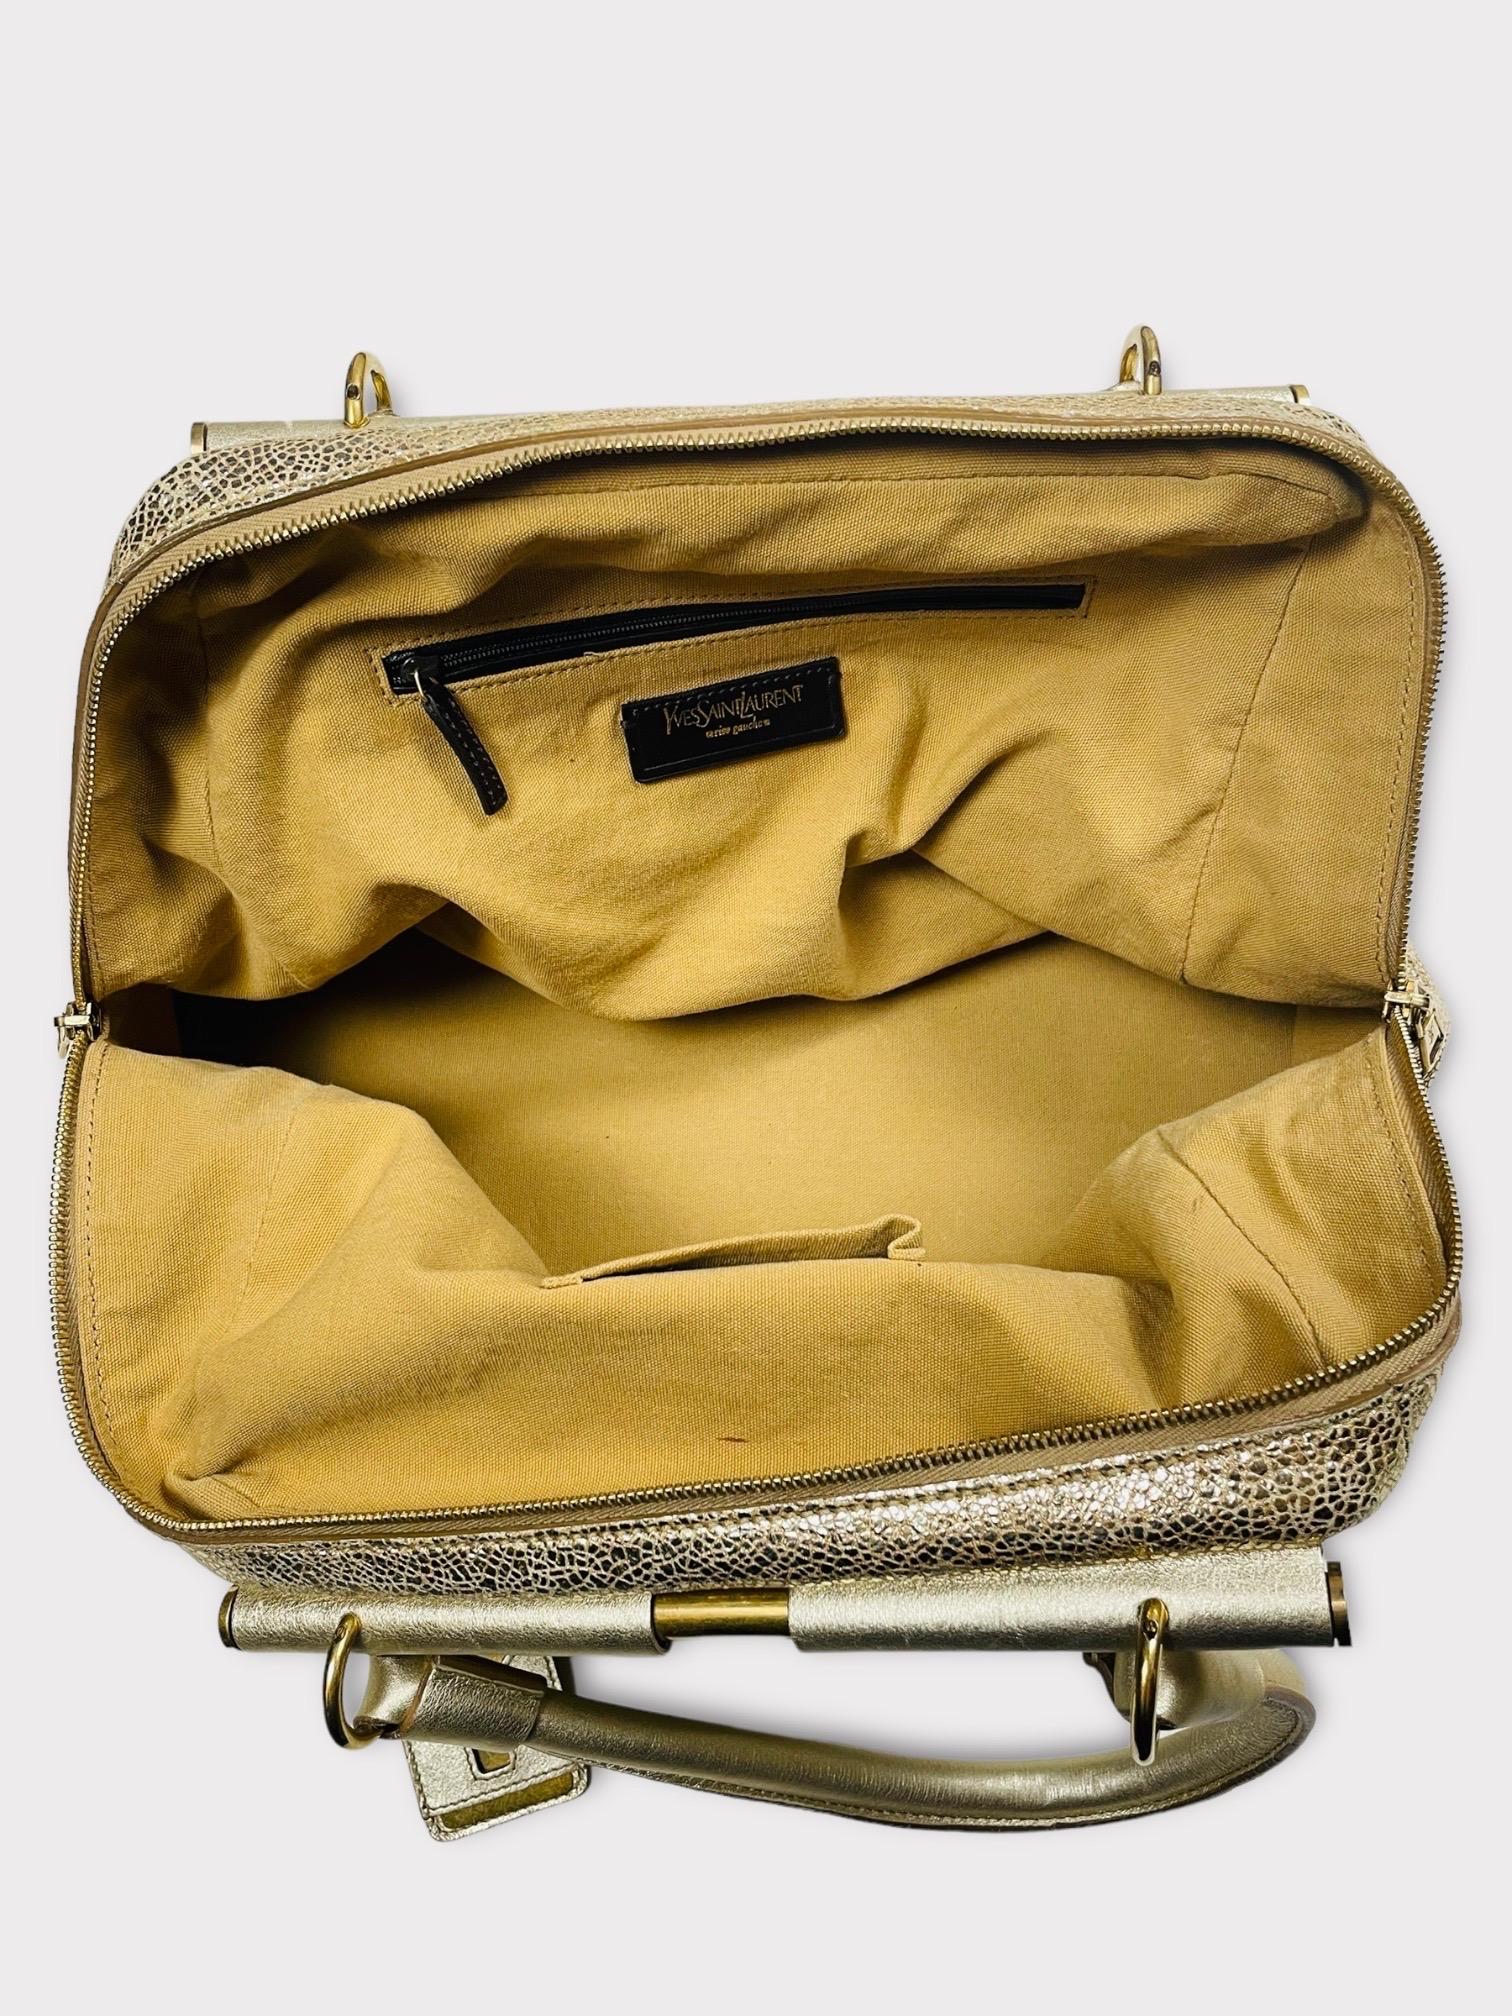 Saint Laurent Rive Gauche Metallic Gold Leather Medium Majorelle Tote Bag For Sale 1